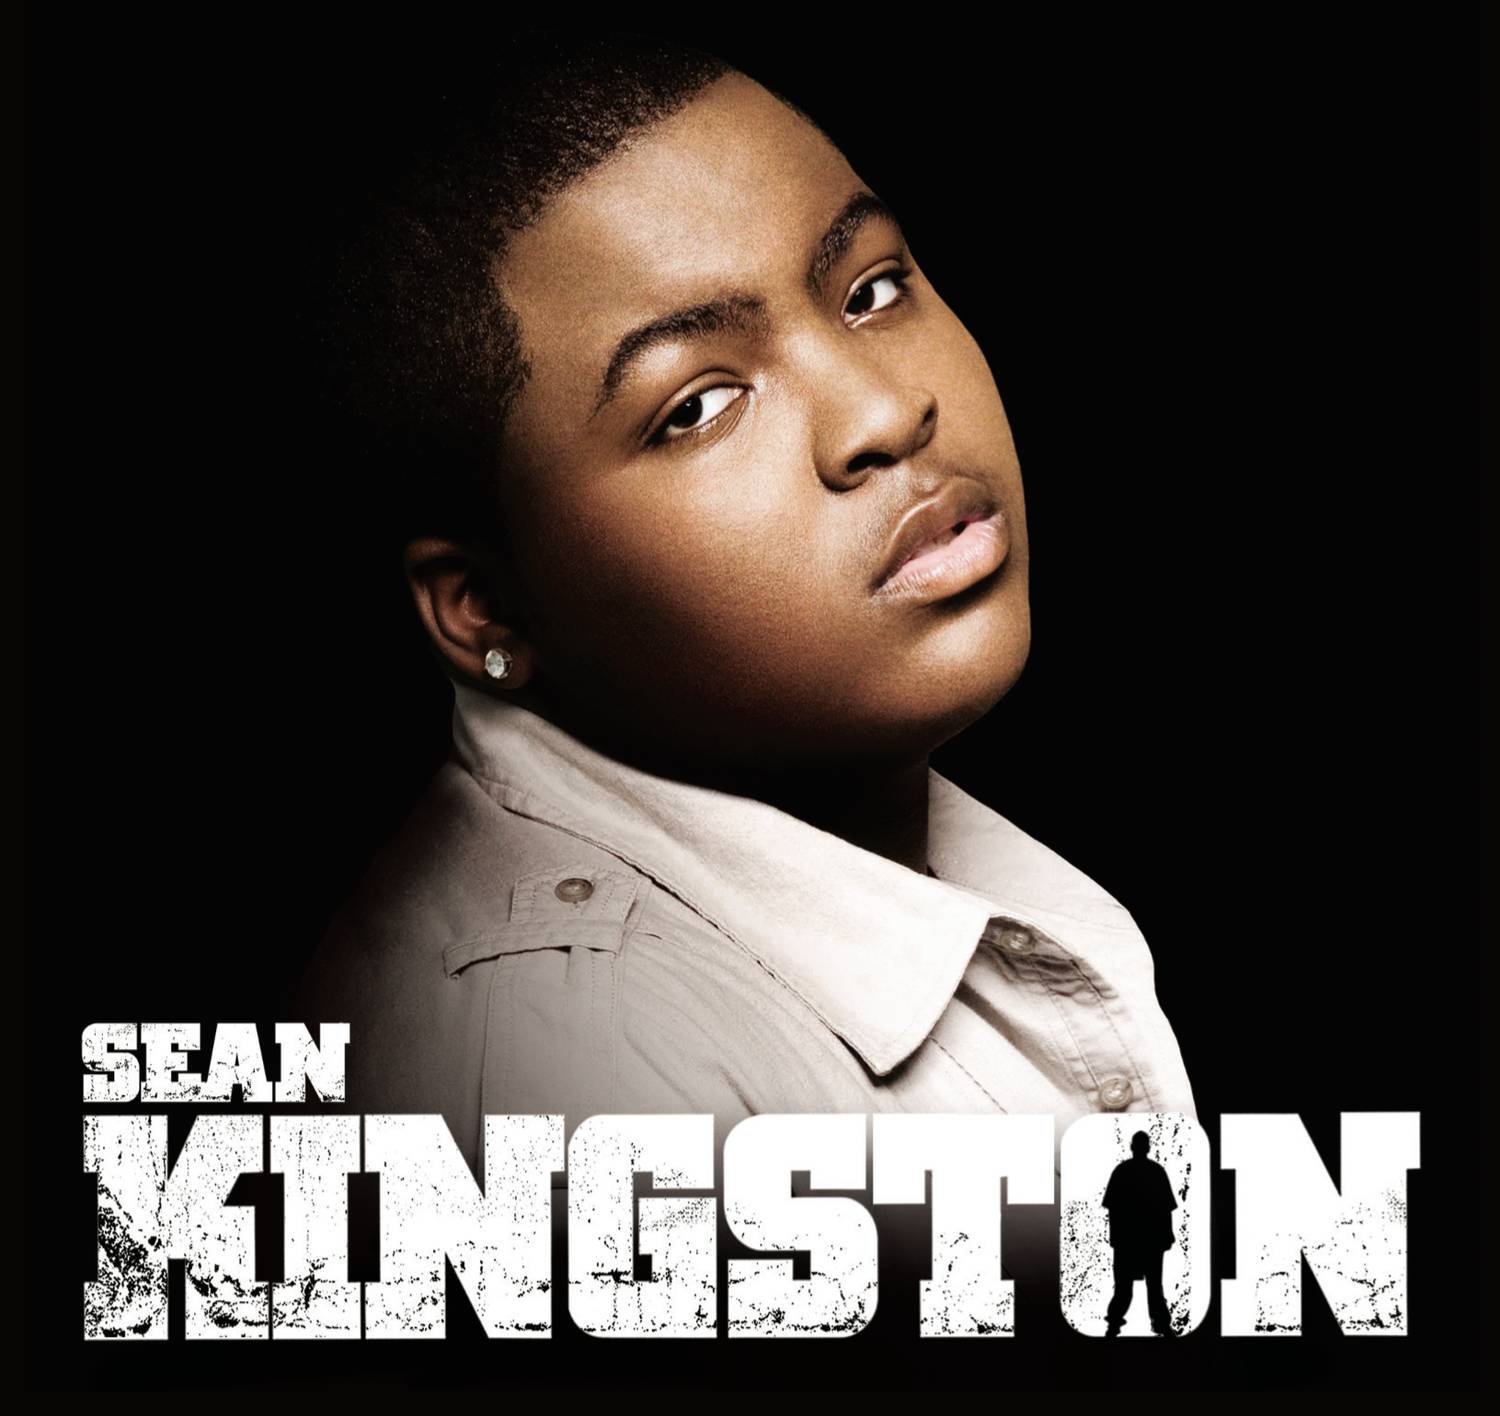 Sean Kingston - Colors (2007) (Reggae Remix featuring Vybz Kartel and Kardinal Offishall)